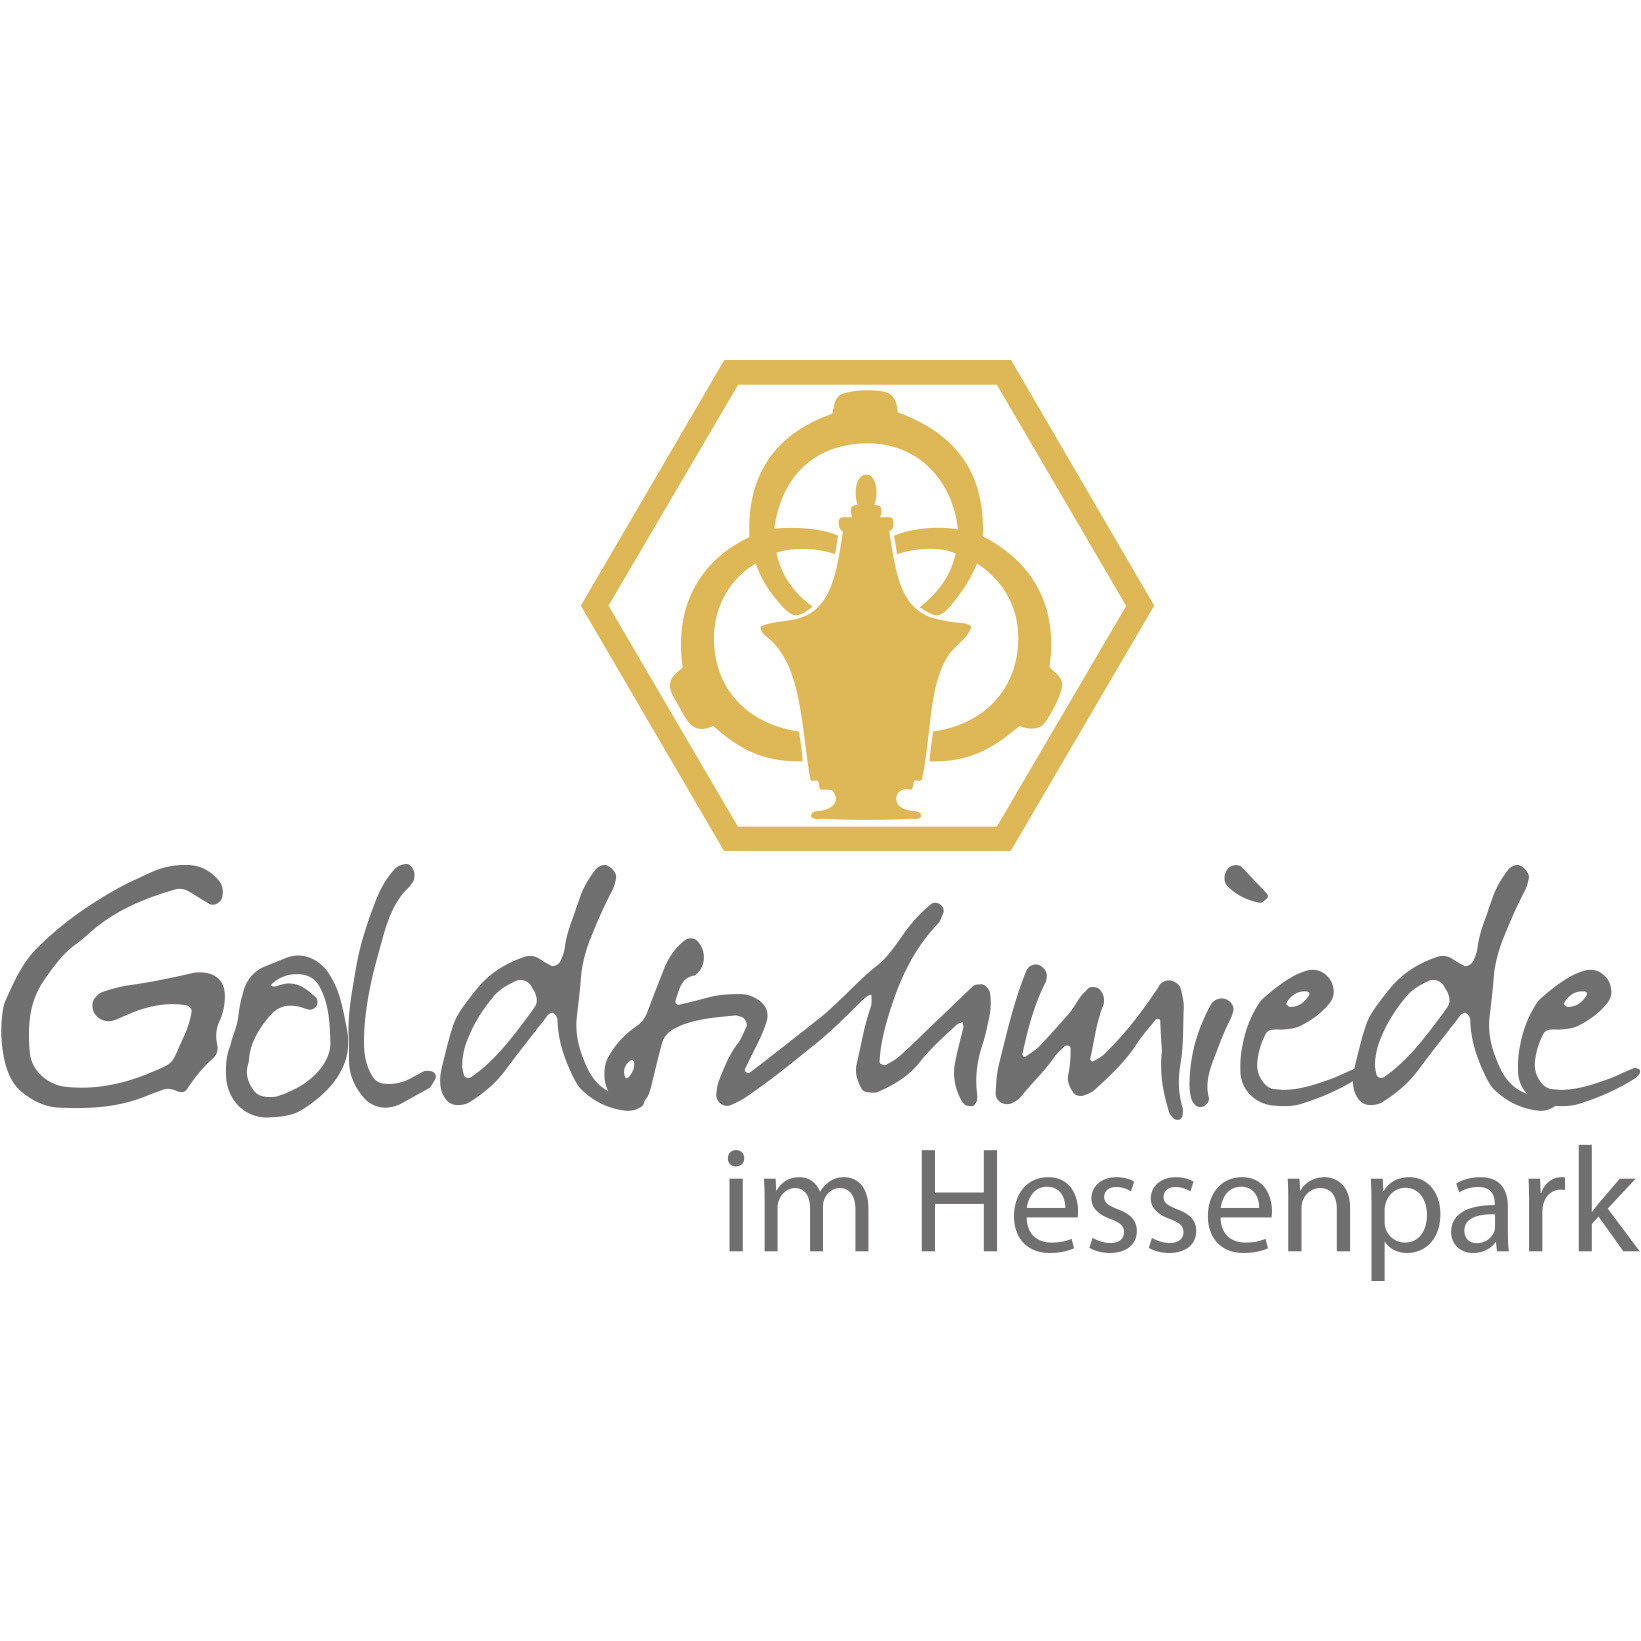 Goldschmiede im Hessenpark  